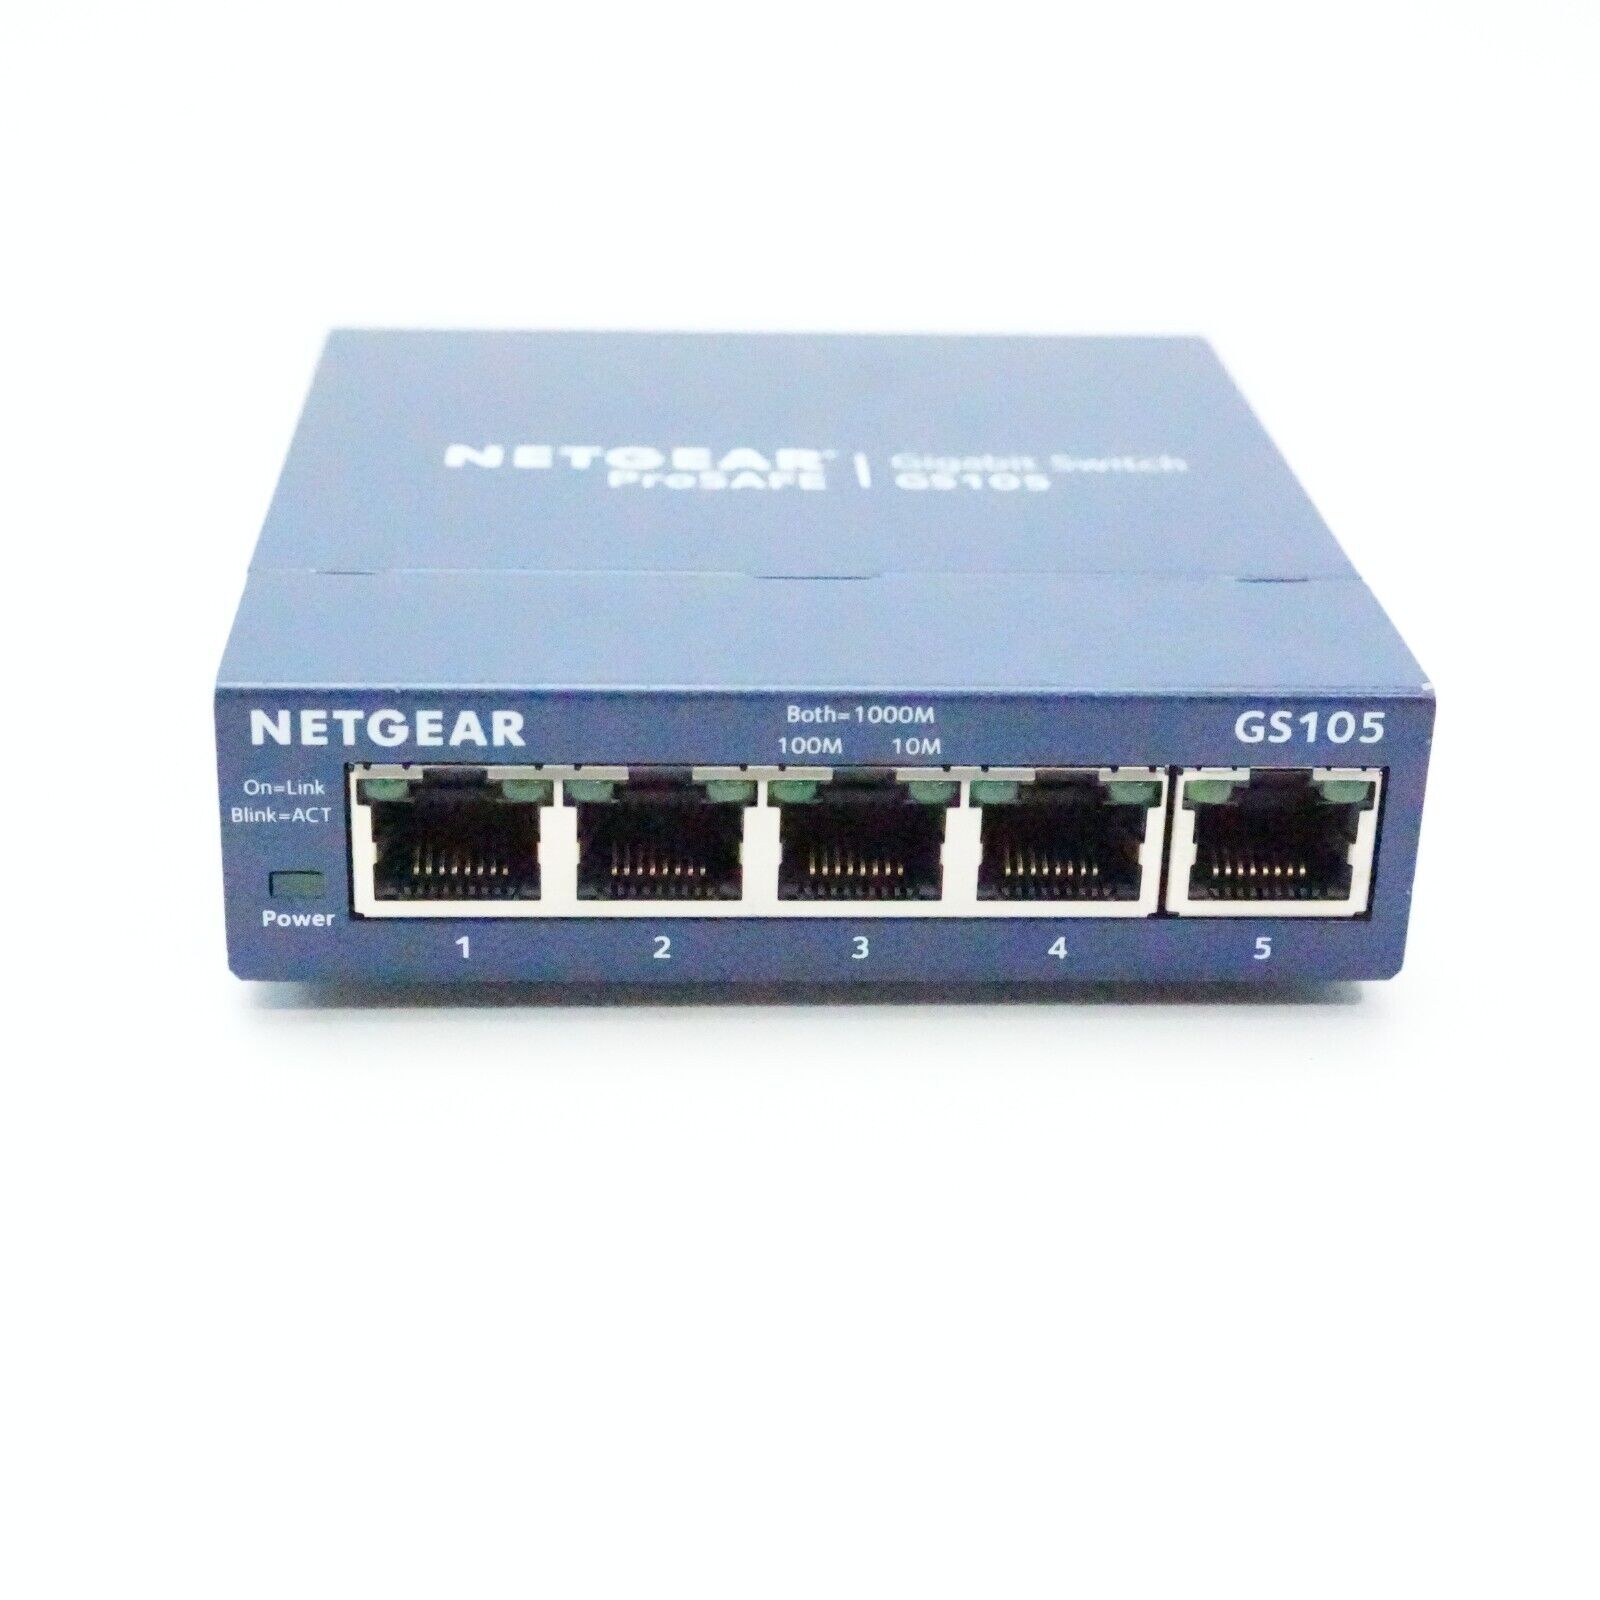 Netgear GS105 V5 Prosafe 5 Port Blue HDMI Gigabit Ethernet Gigabit Switch